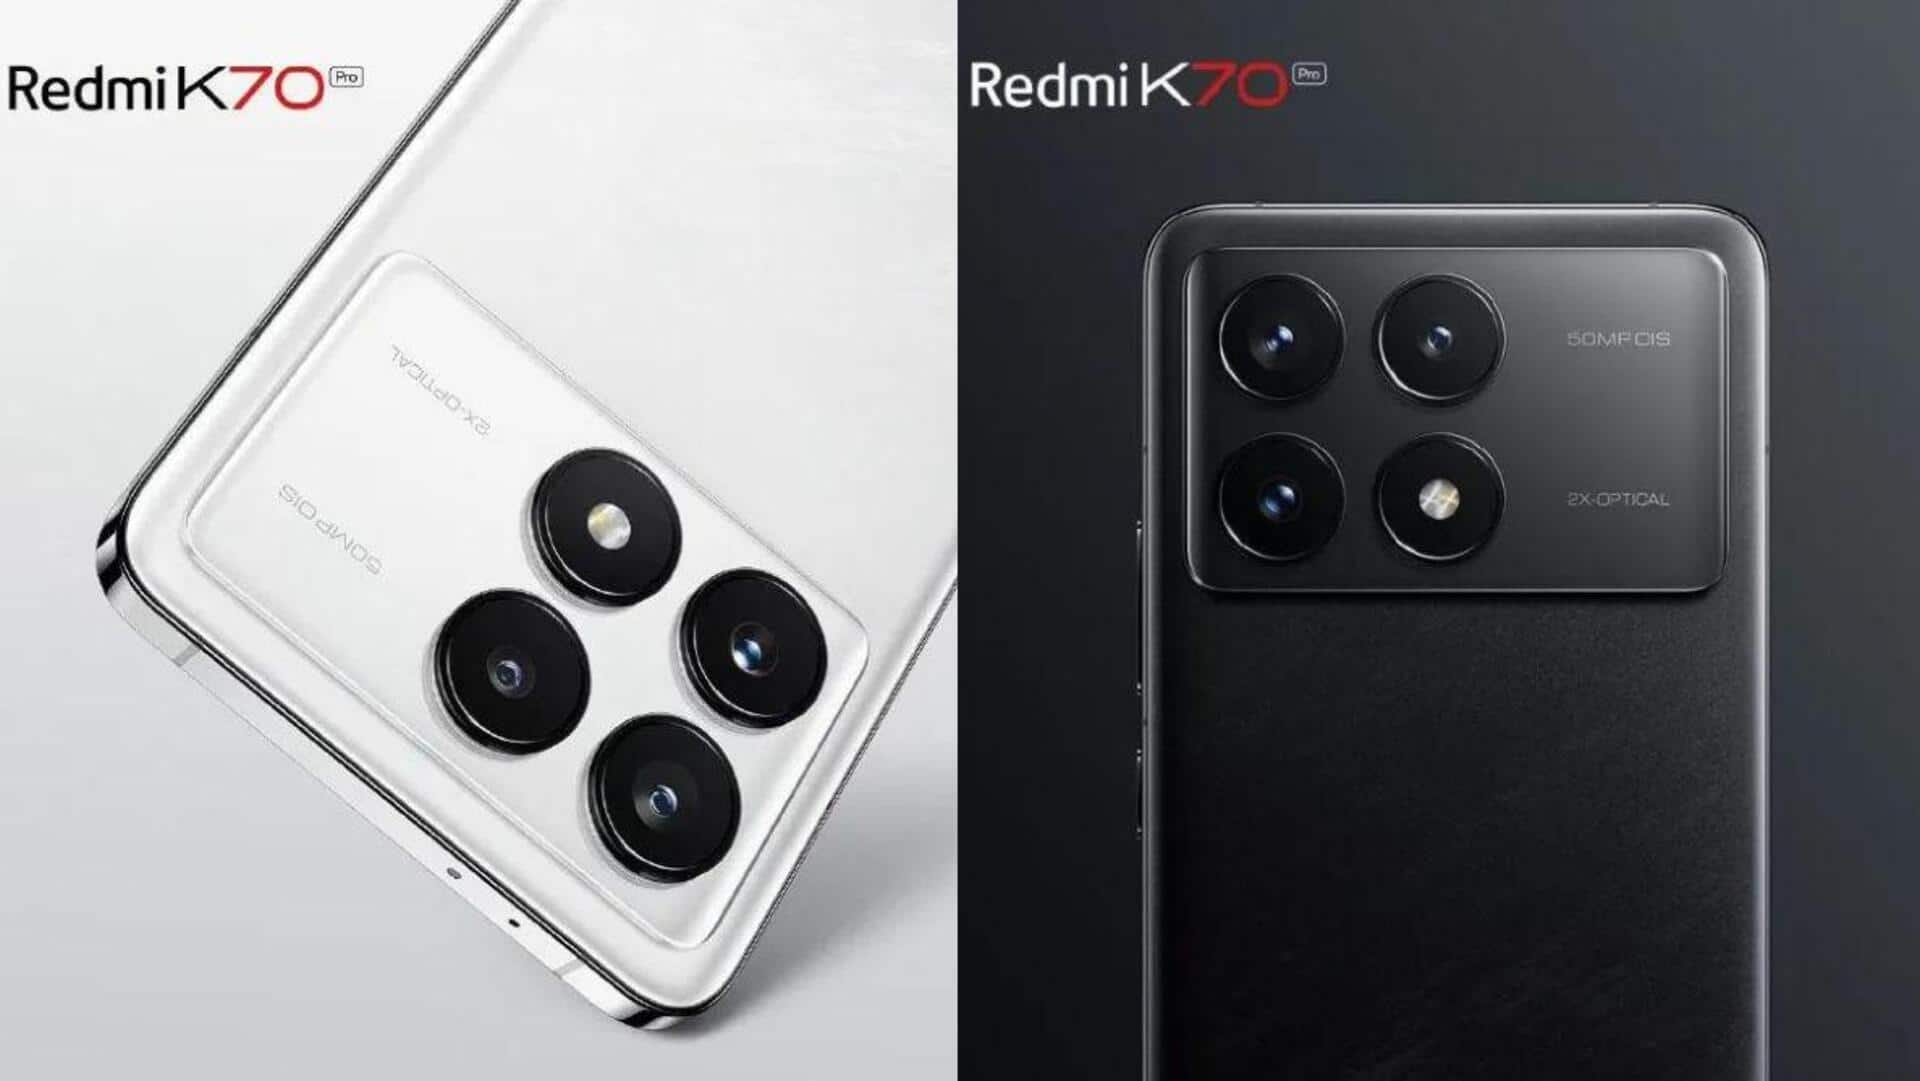 Xiaomi Redmi K70 Pro pictures, official photos